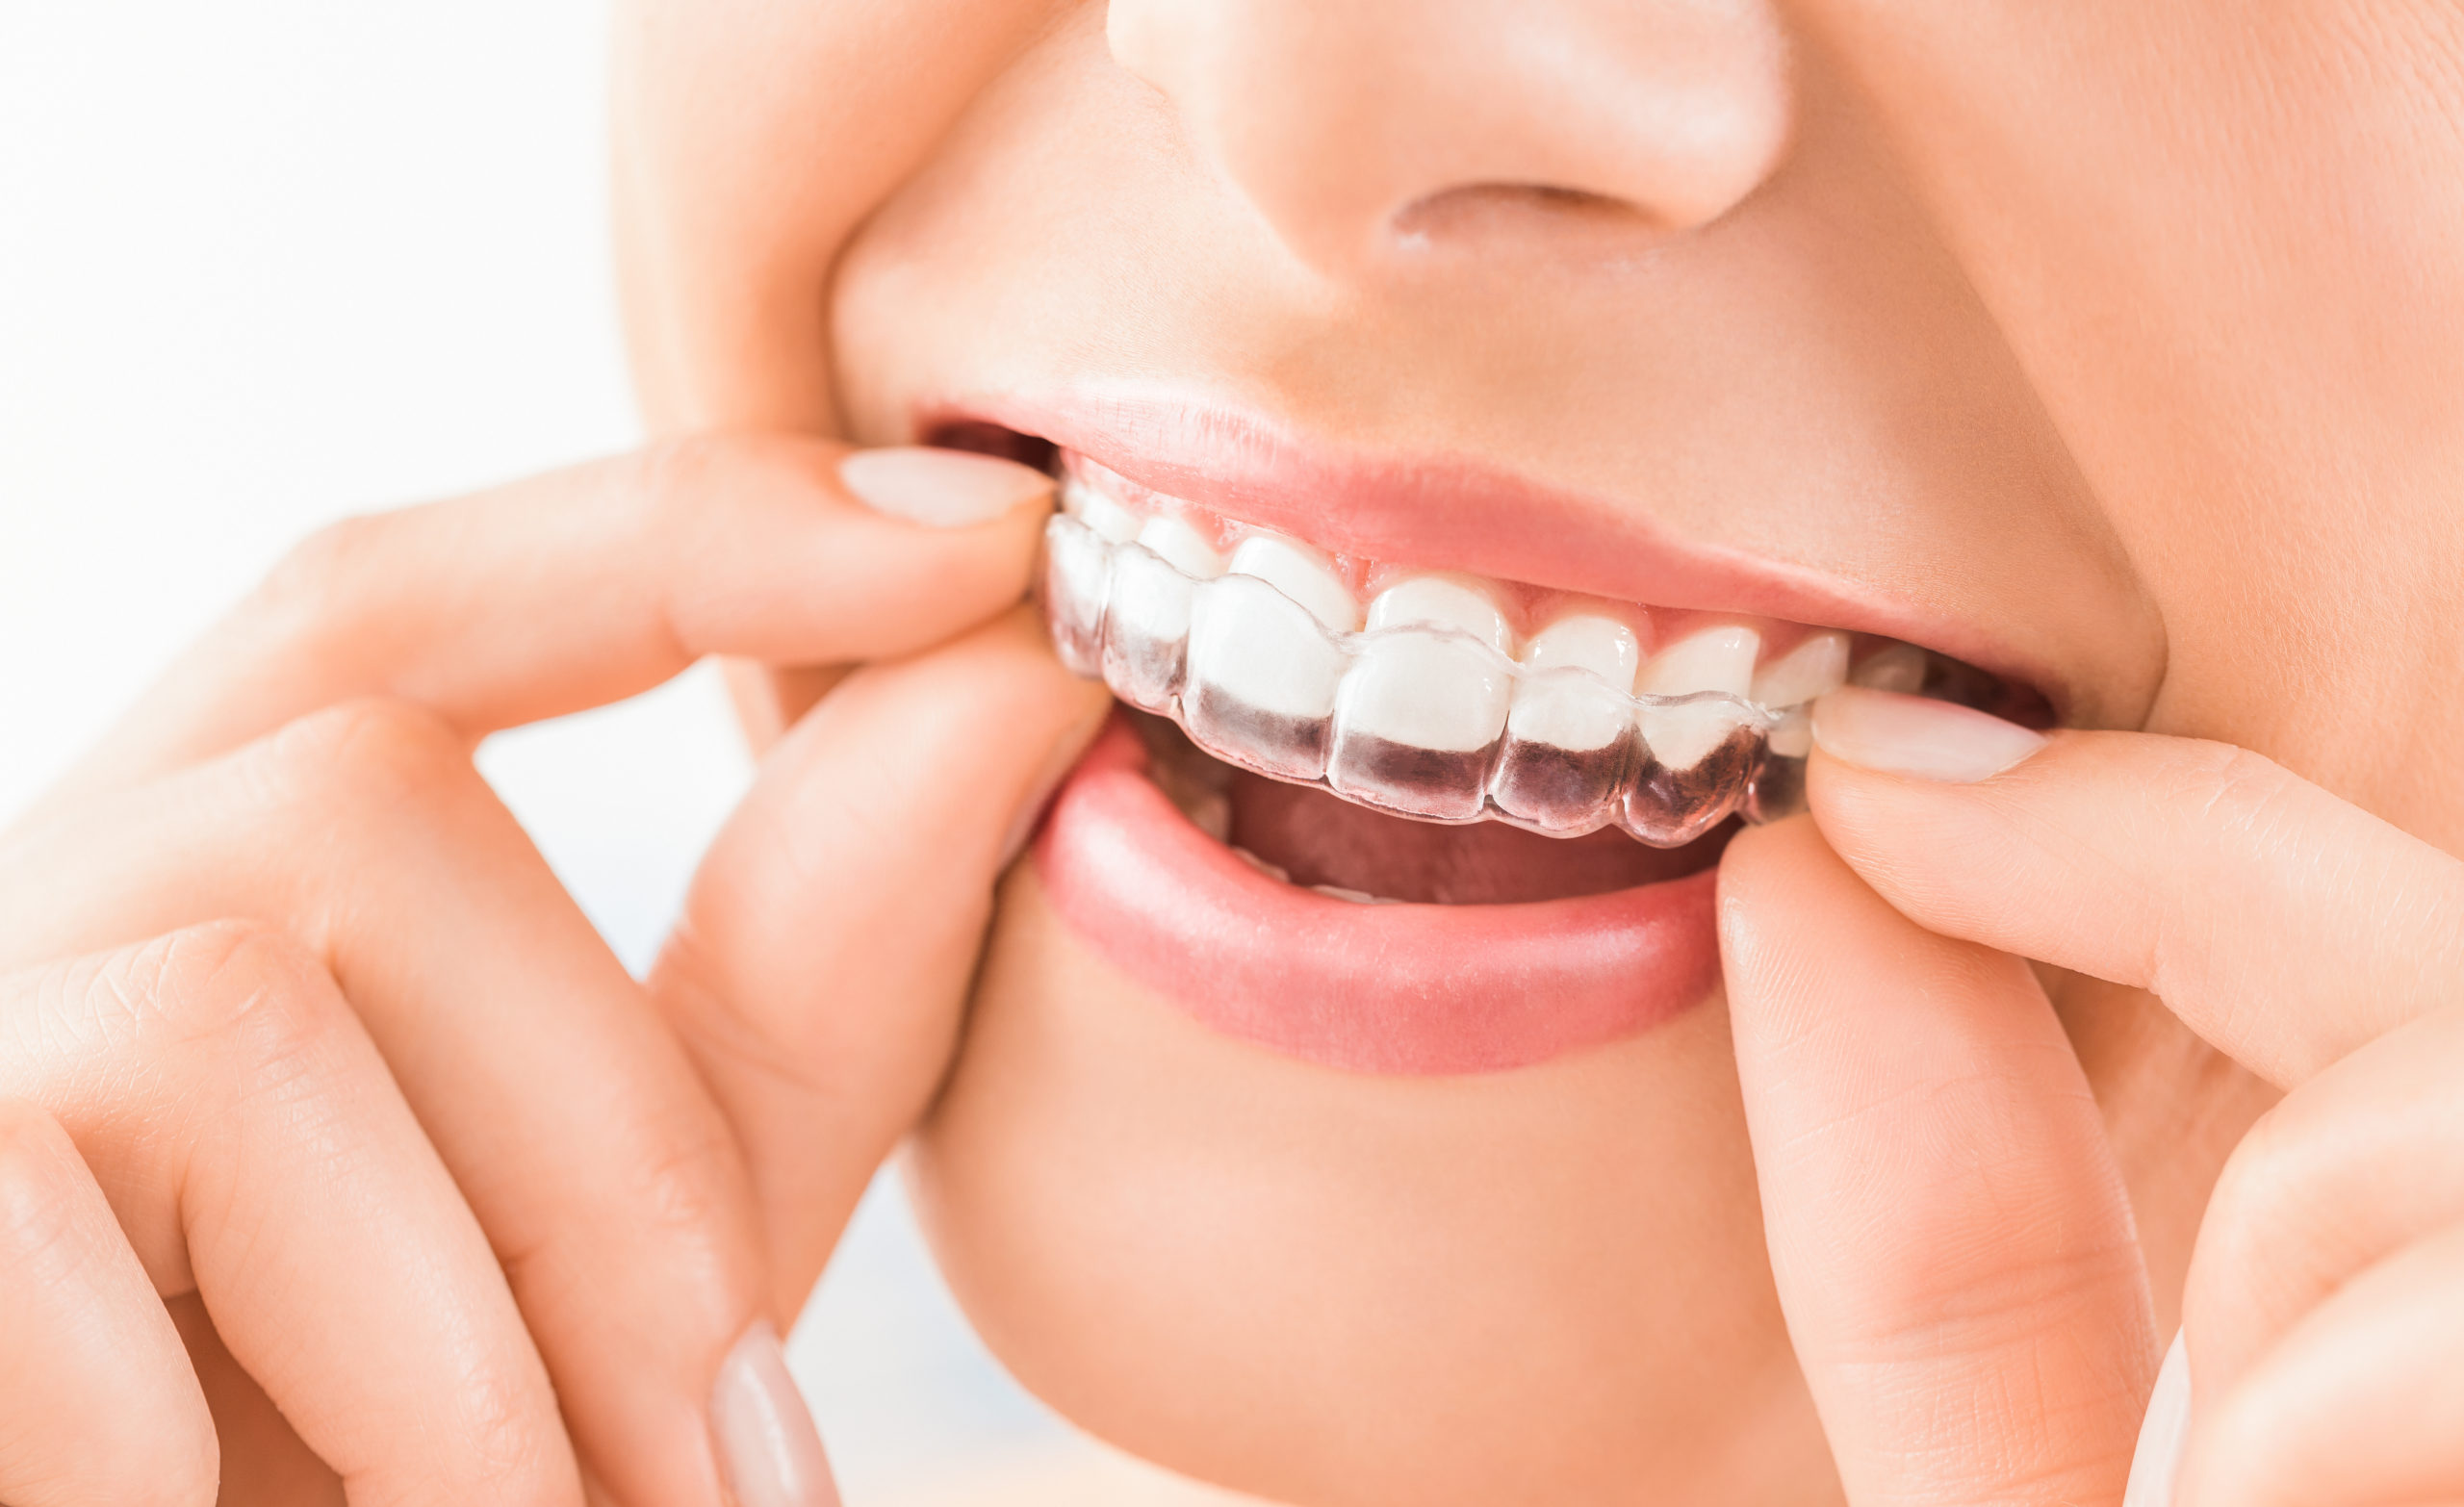 Teeth Whitening Strips & Trays